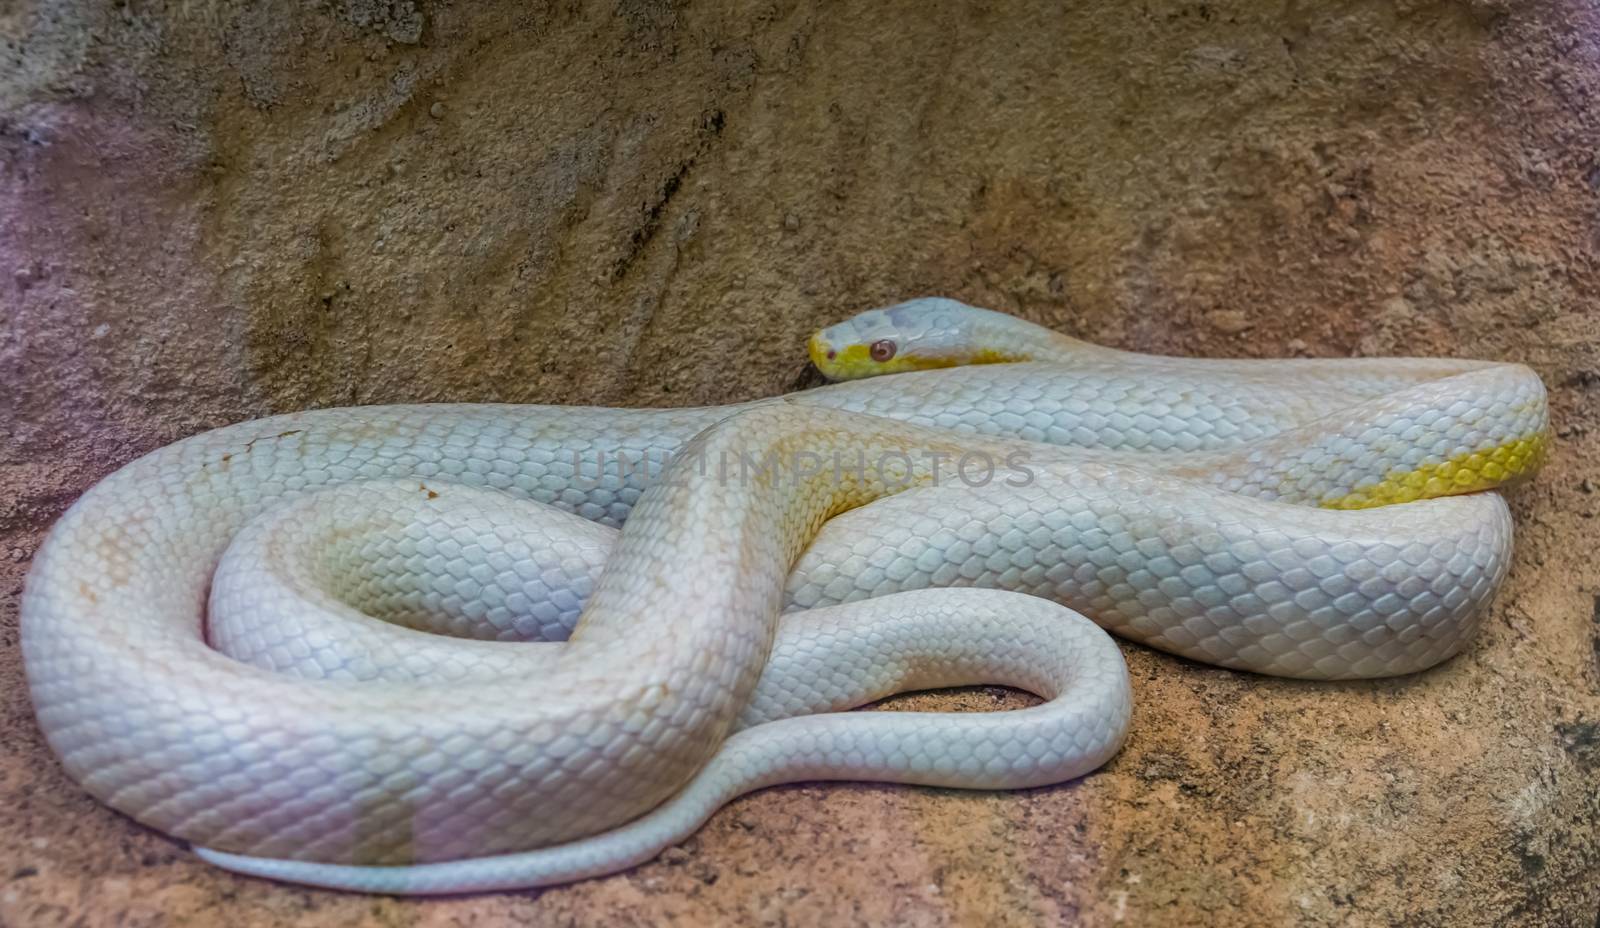 white albino western rat snake, color mutation, popular reptile specie from America by charlottebleijenberg